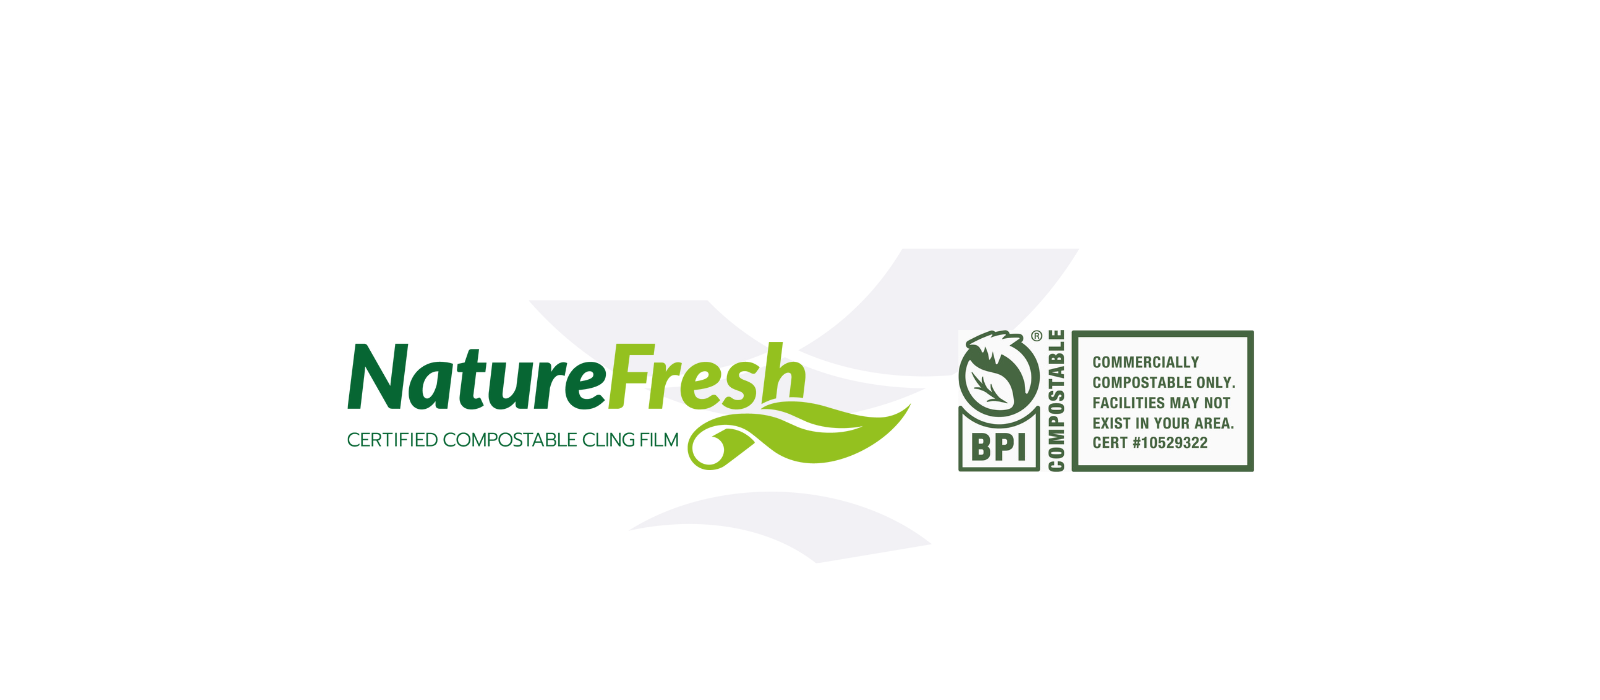 In Nord America, certificazione di compostabilità commerciale “BPI” per Nature Fresh